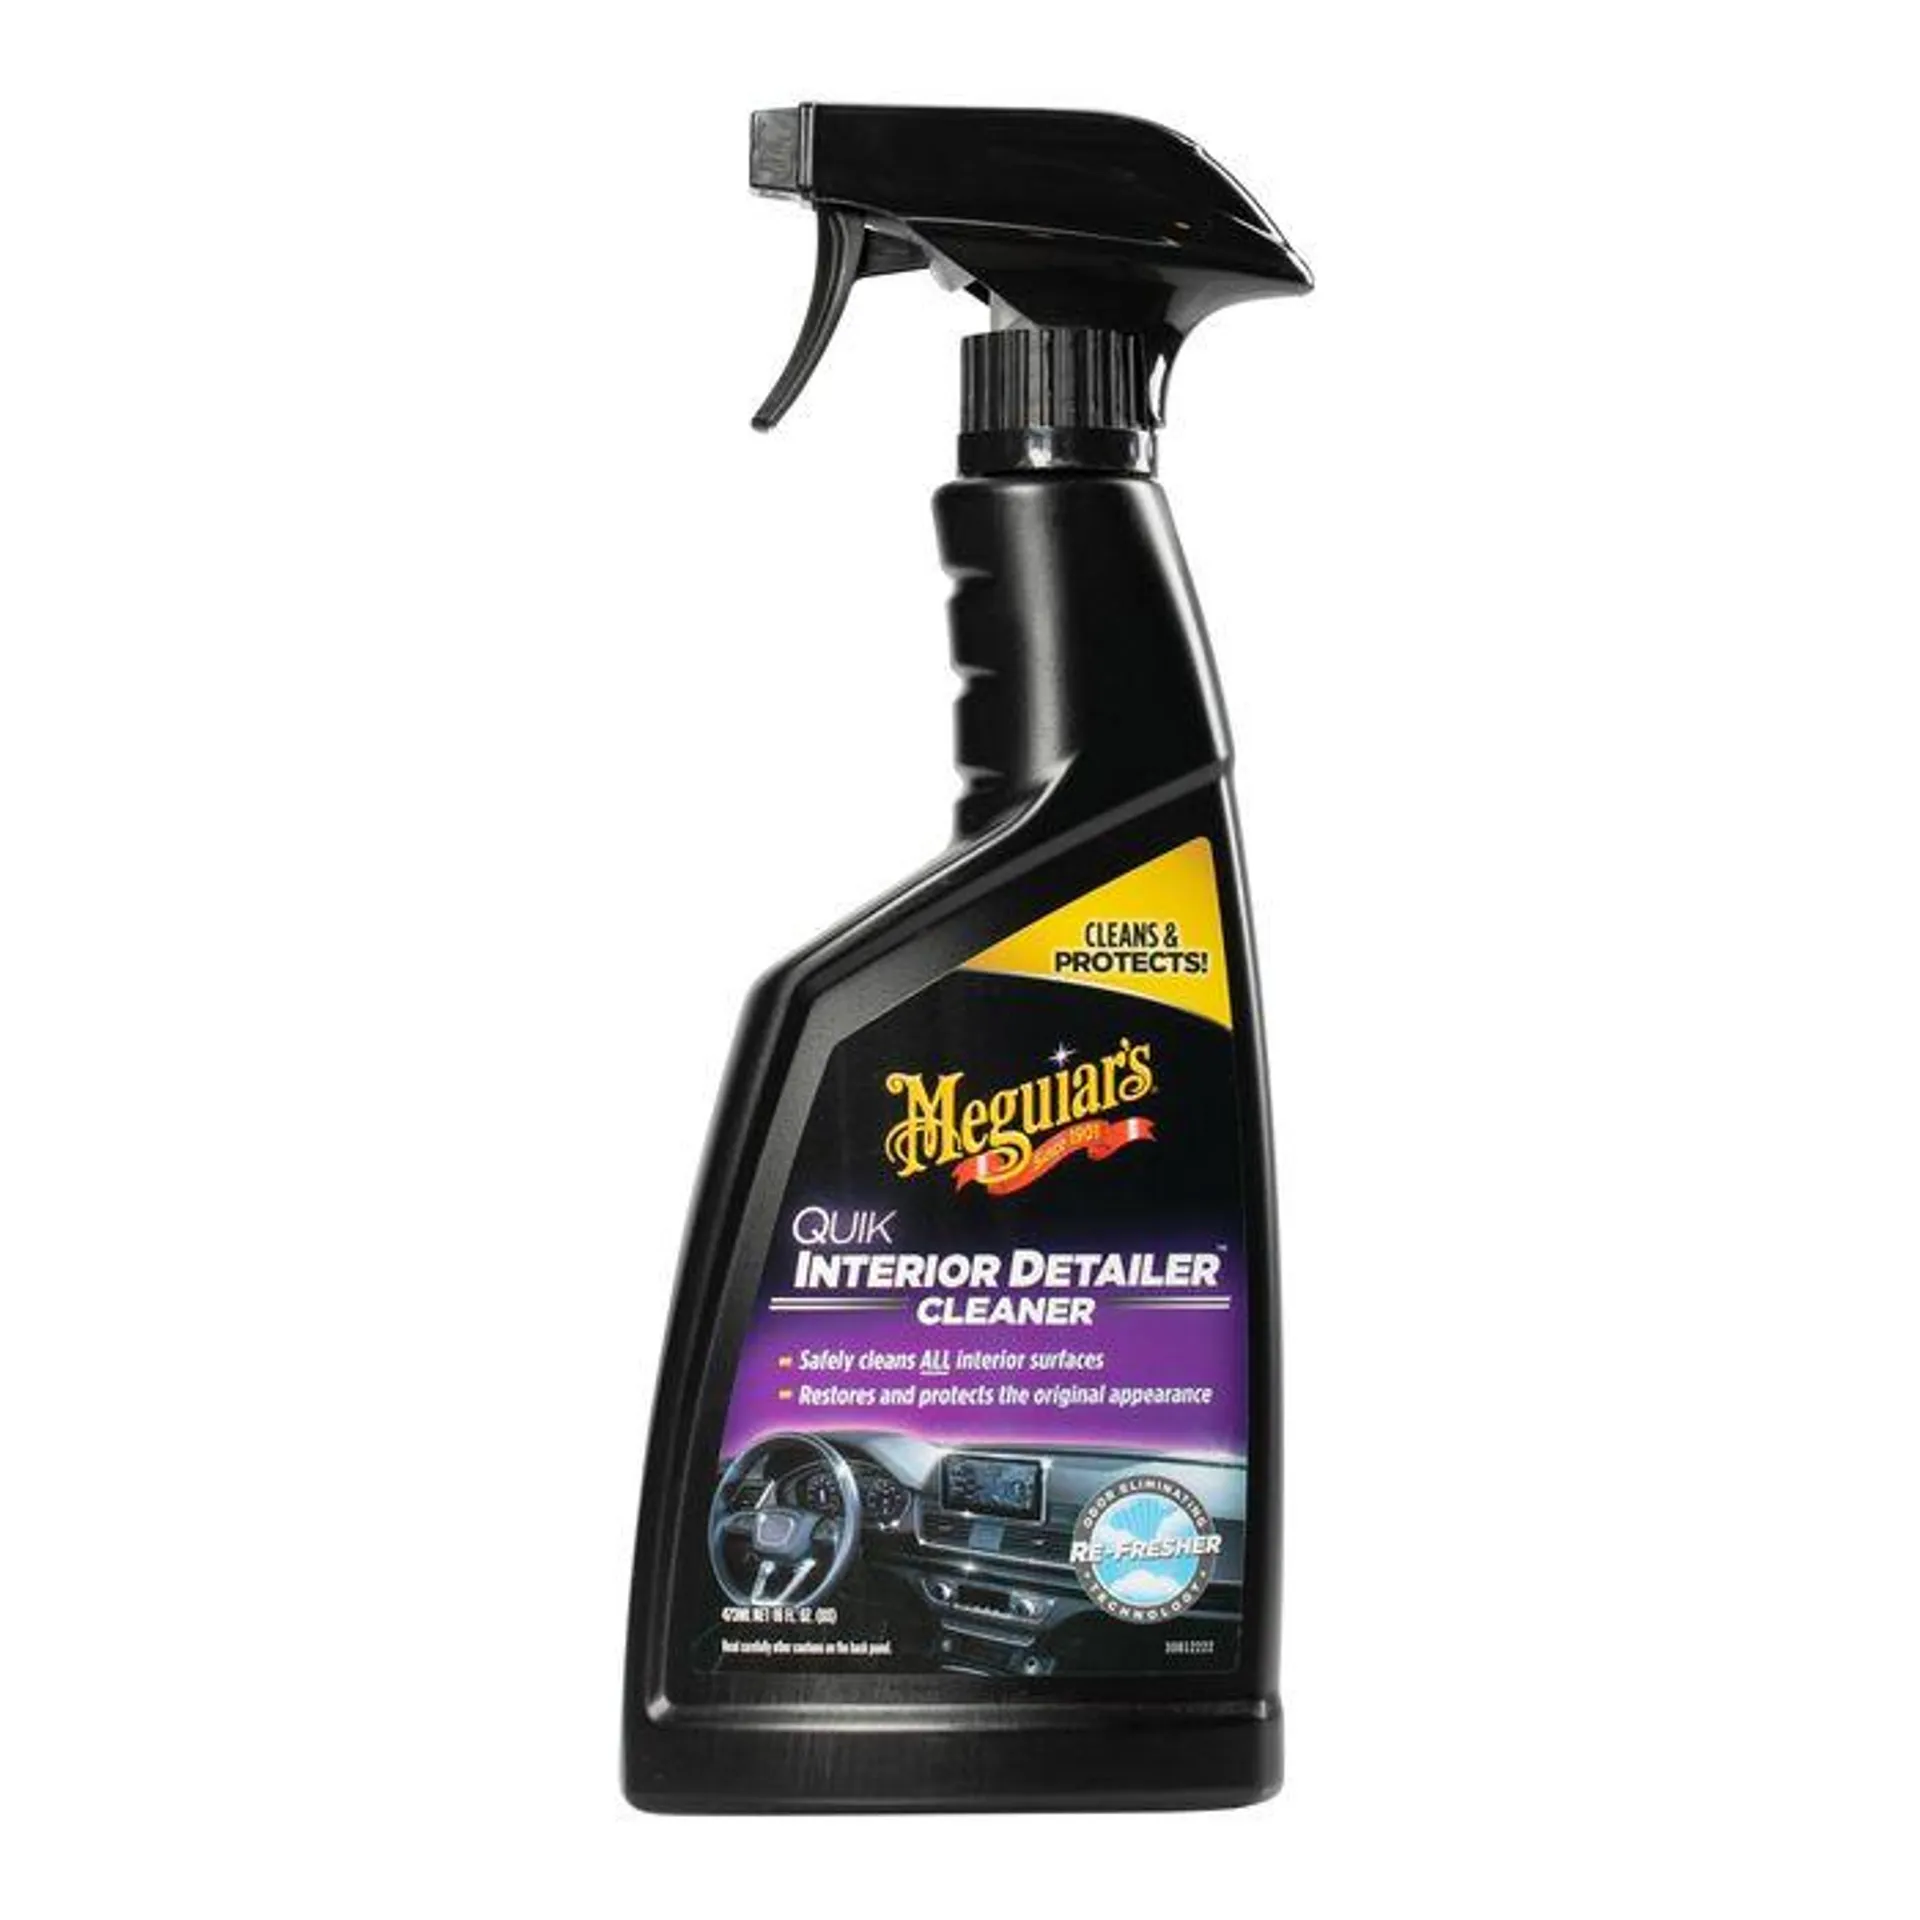 Meguiar's Quick Interior Detailer Cleaner Spray 16oz